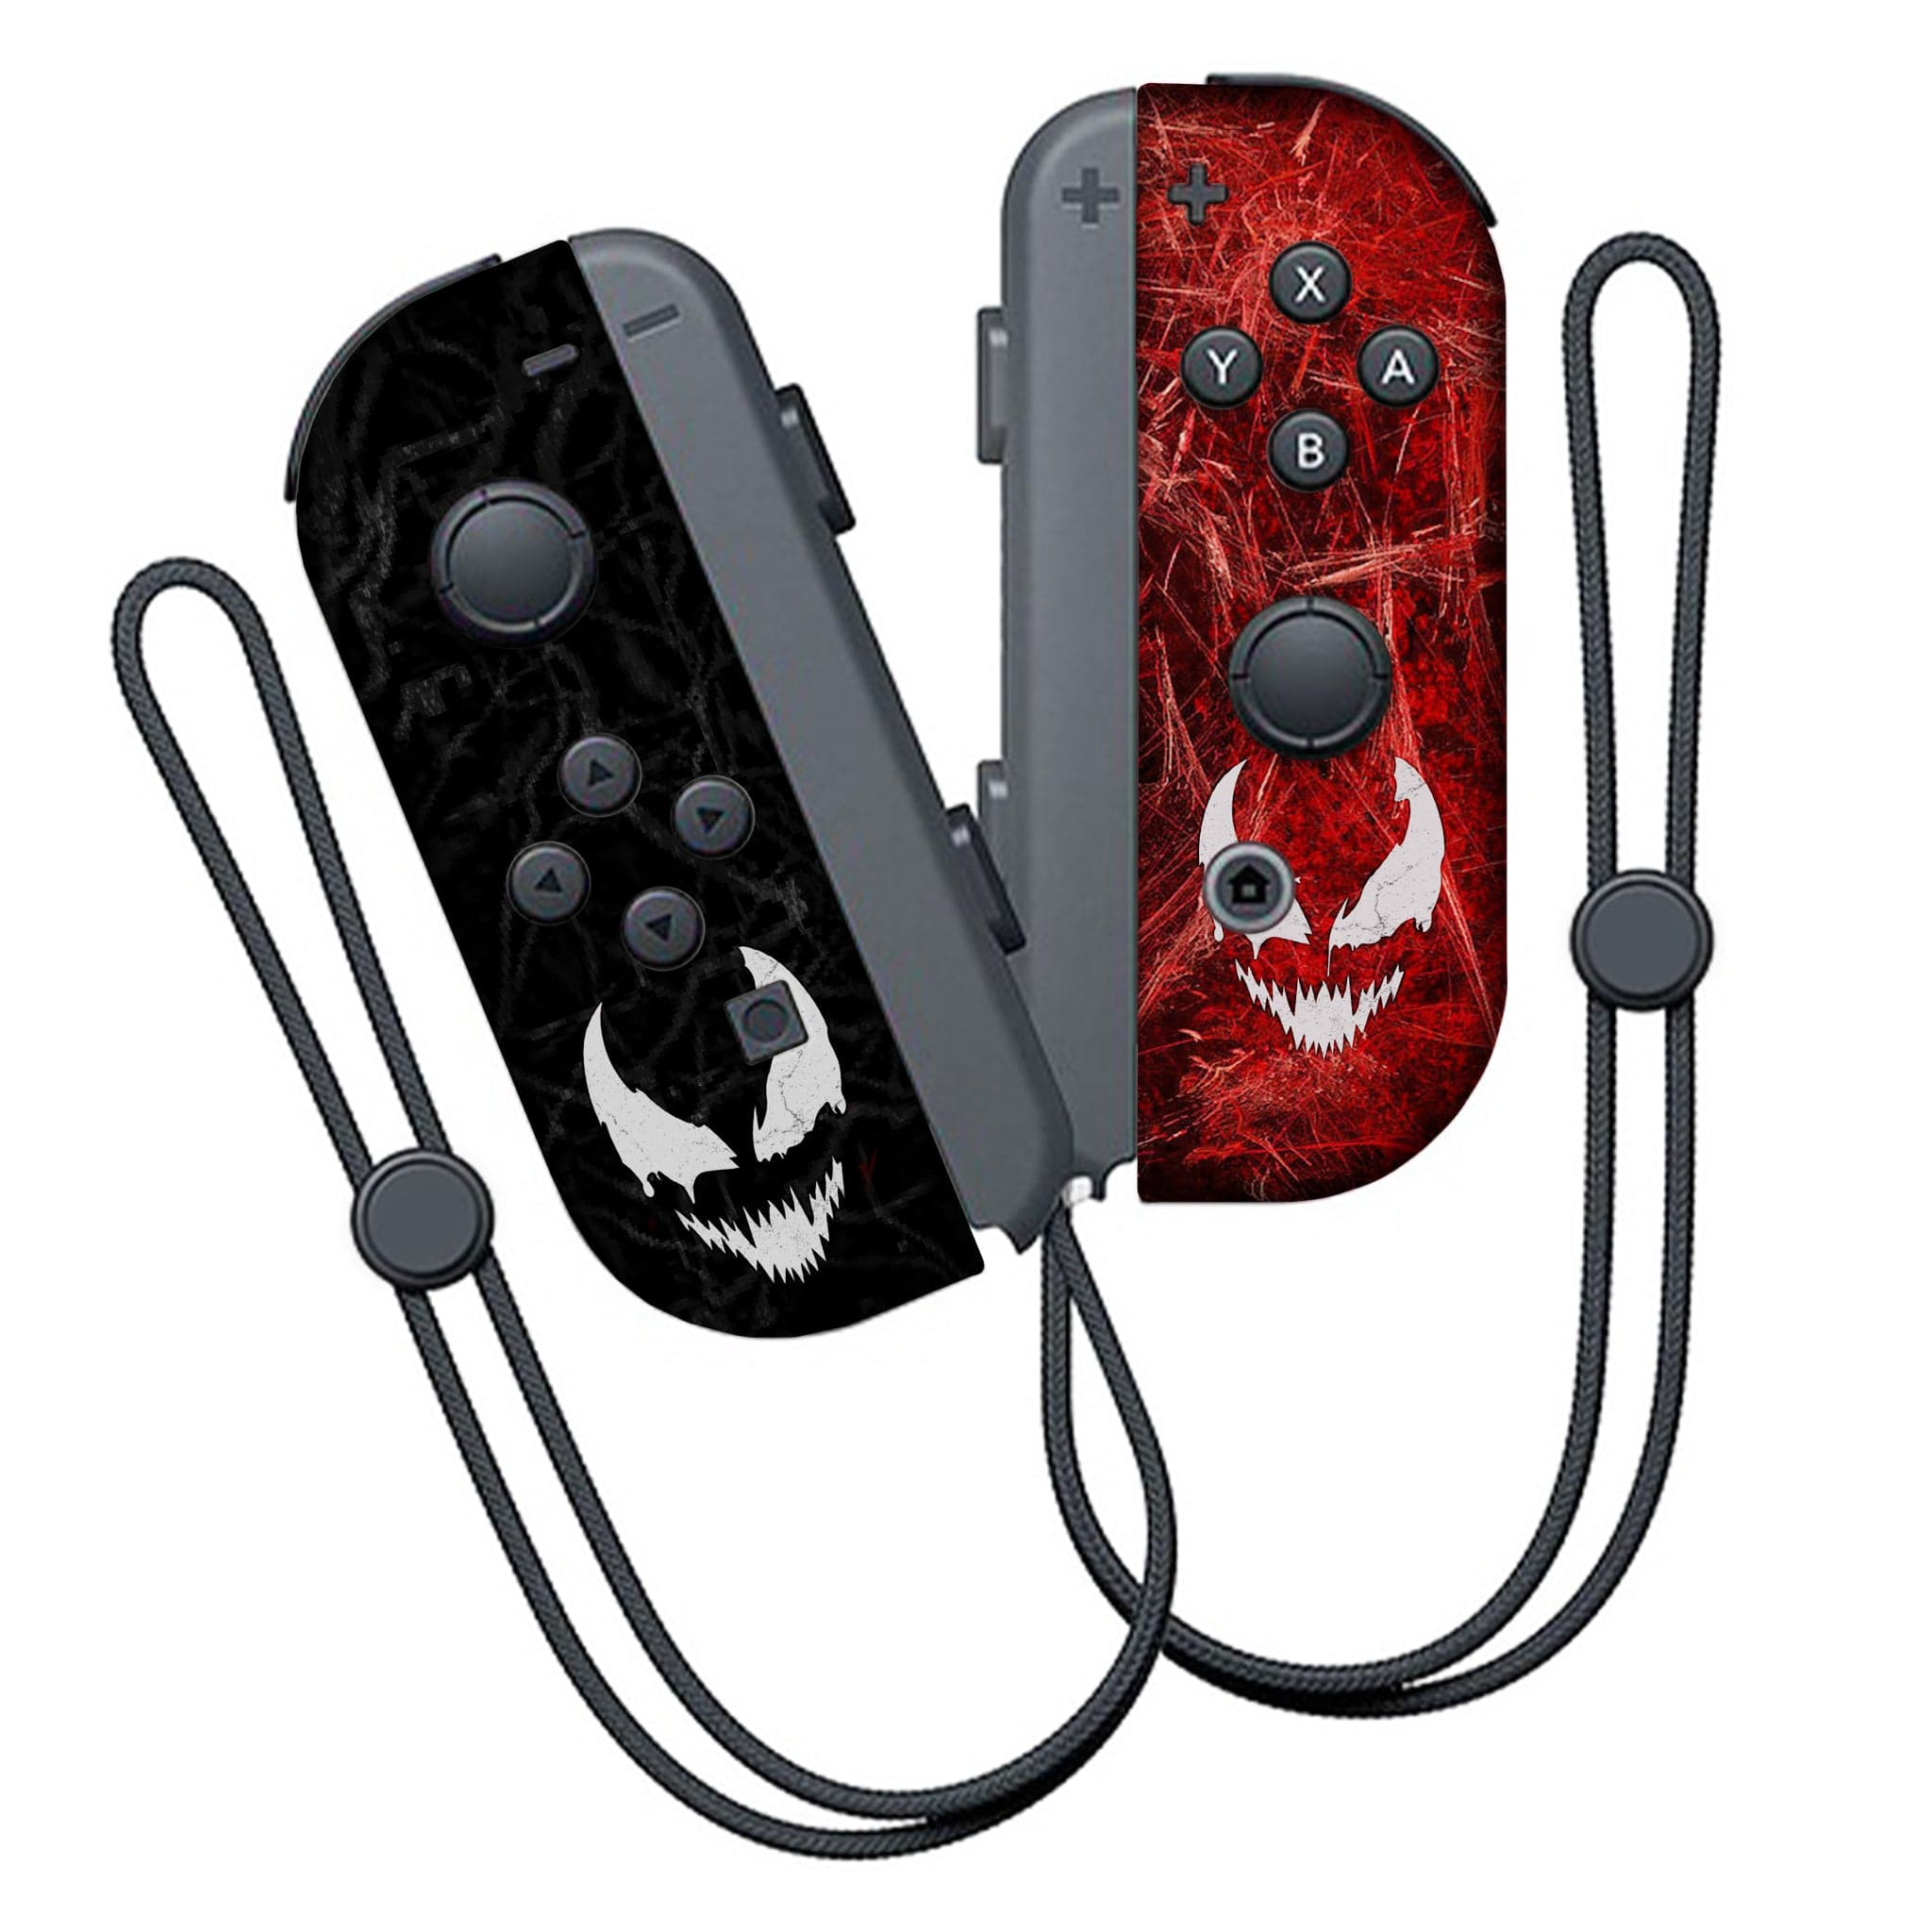 At interagere fossil Wardian sag Best Nintendo Switch Price - Venom & Carnage Theme